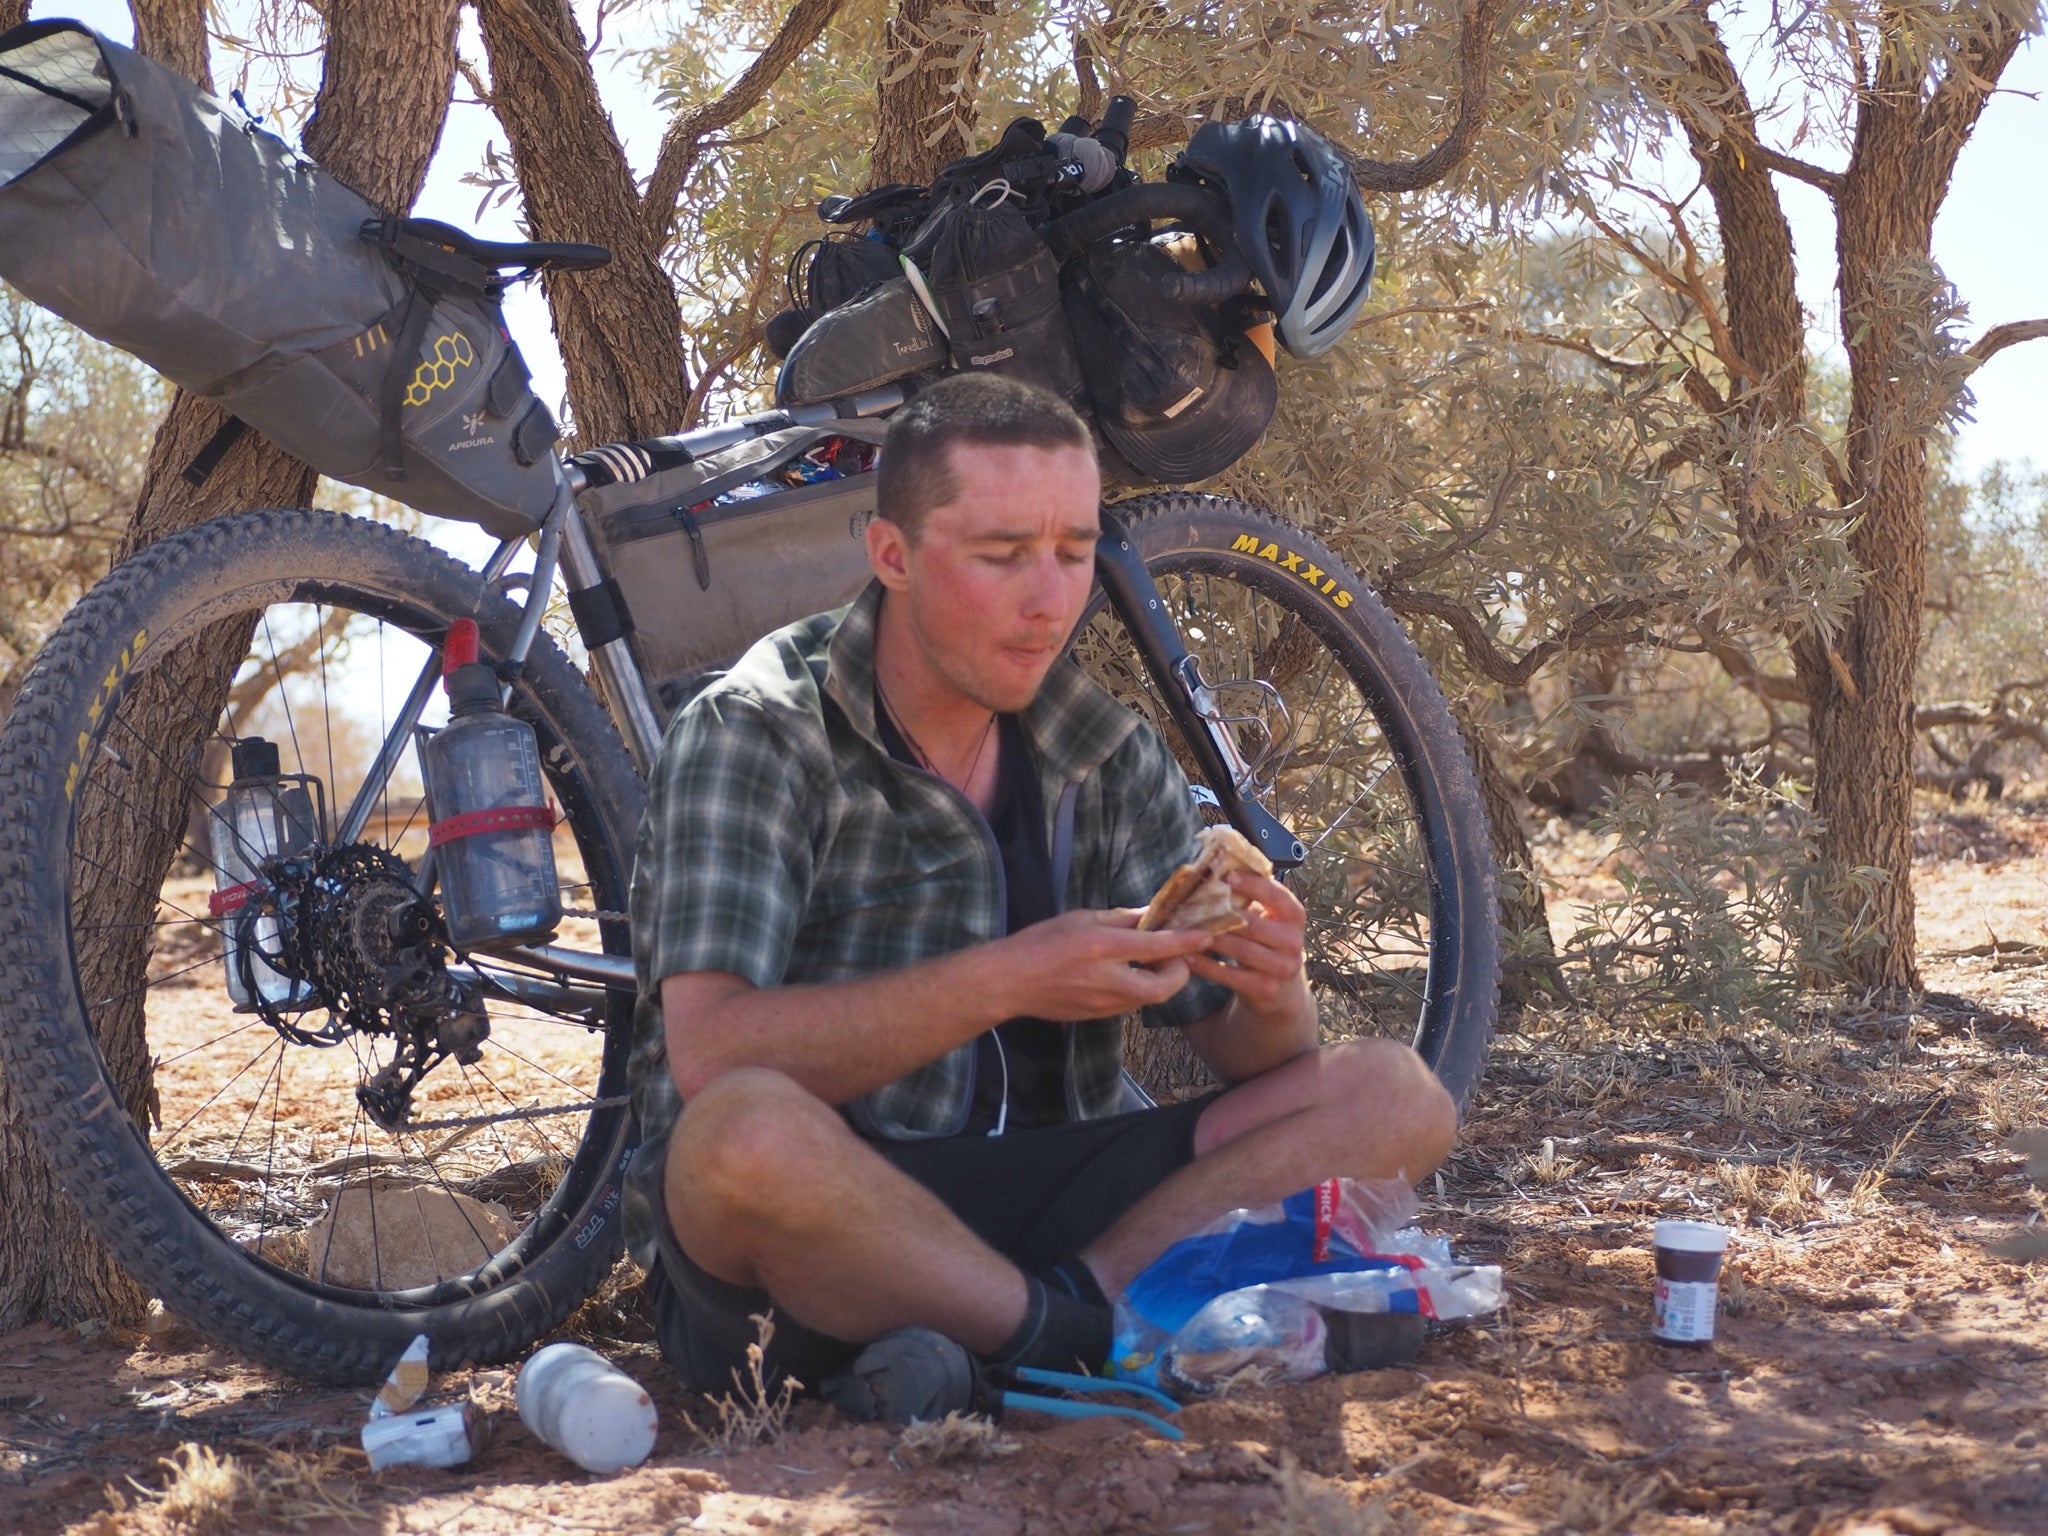 Bikepacking through desert